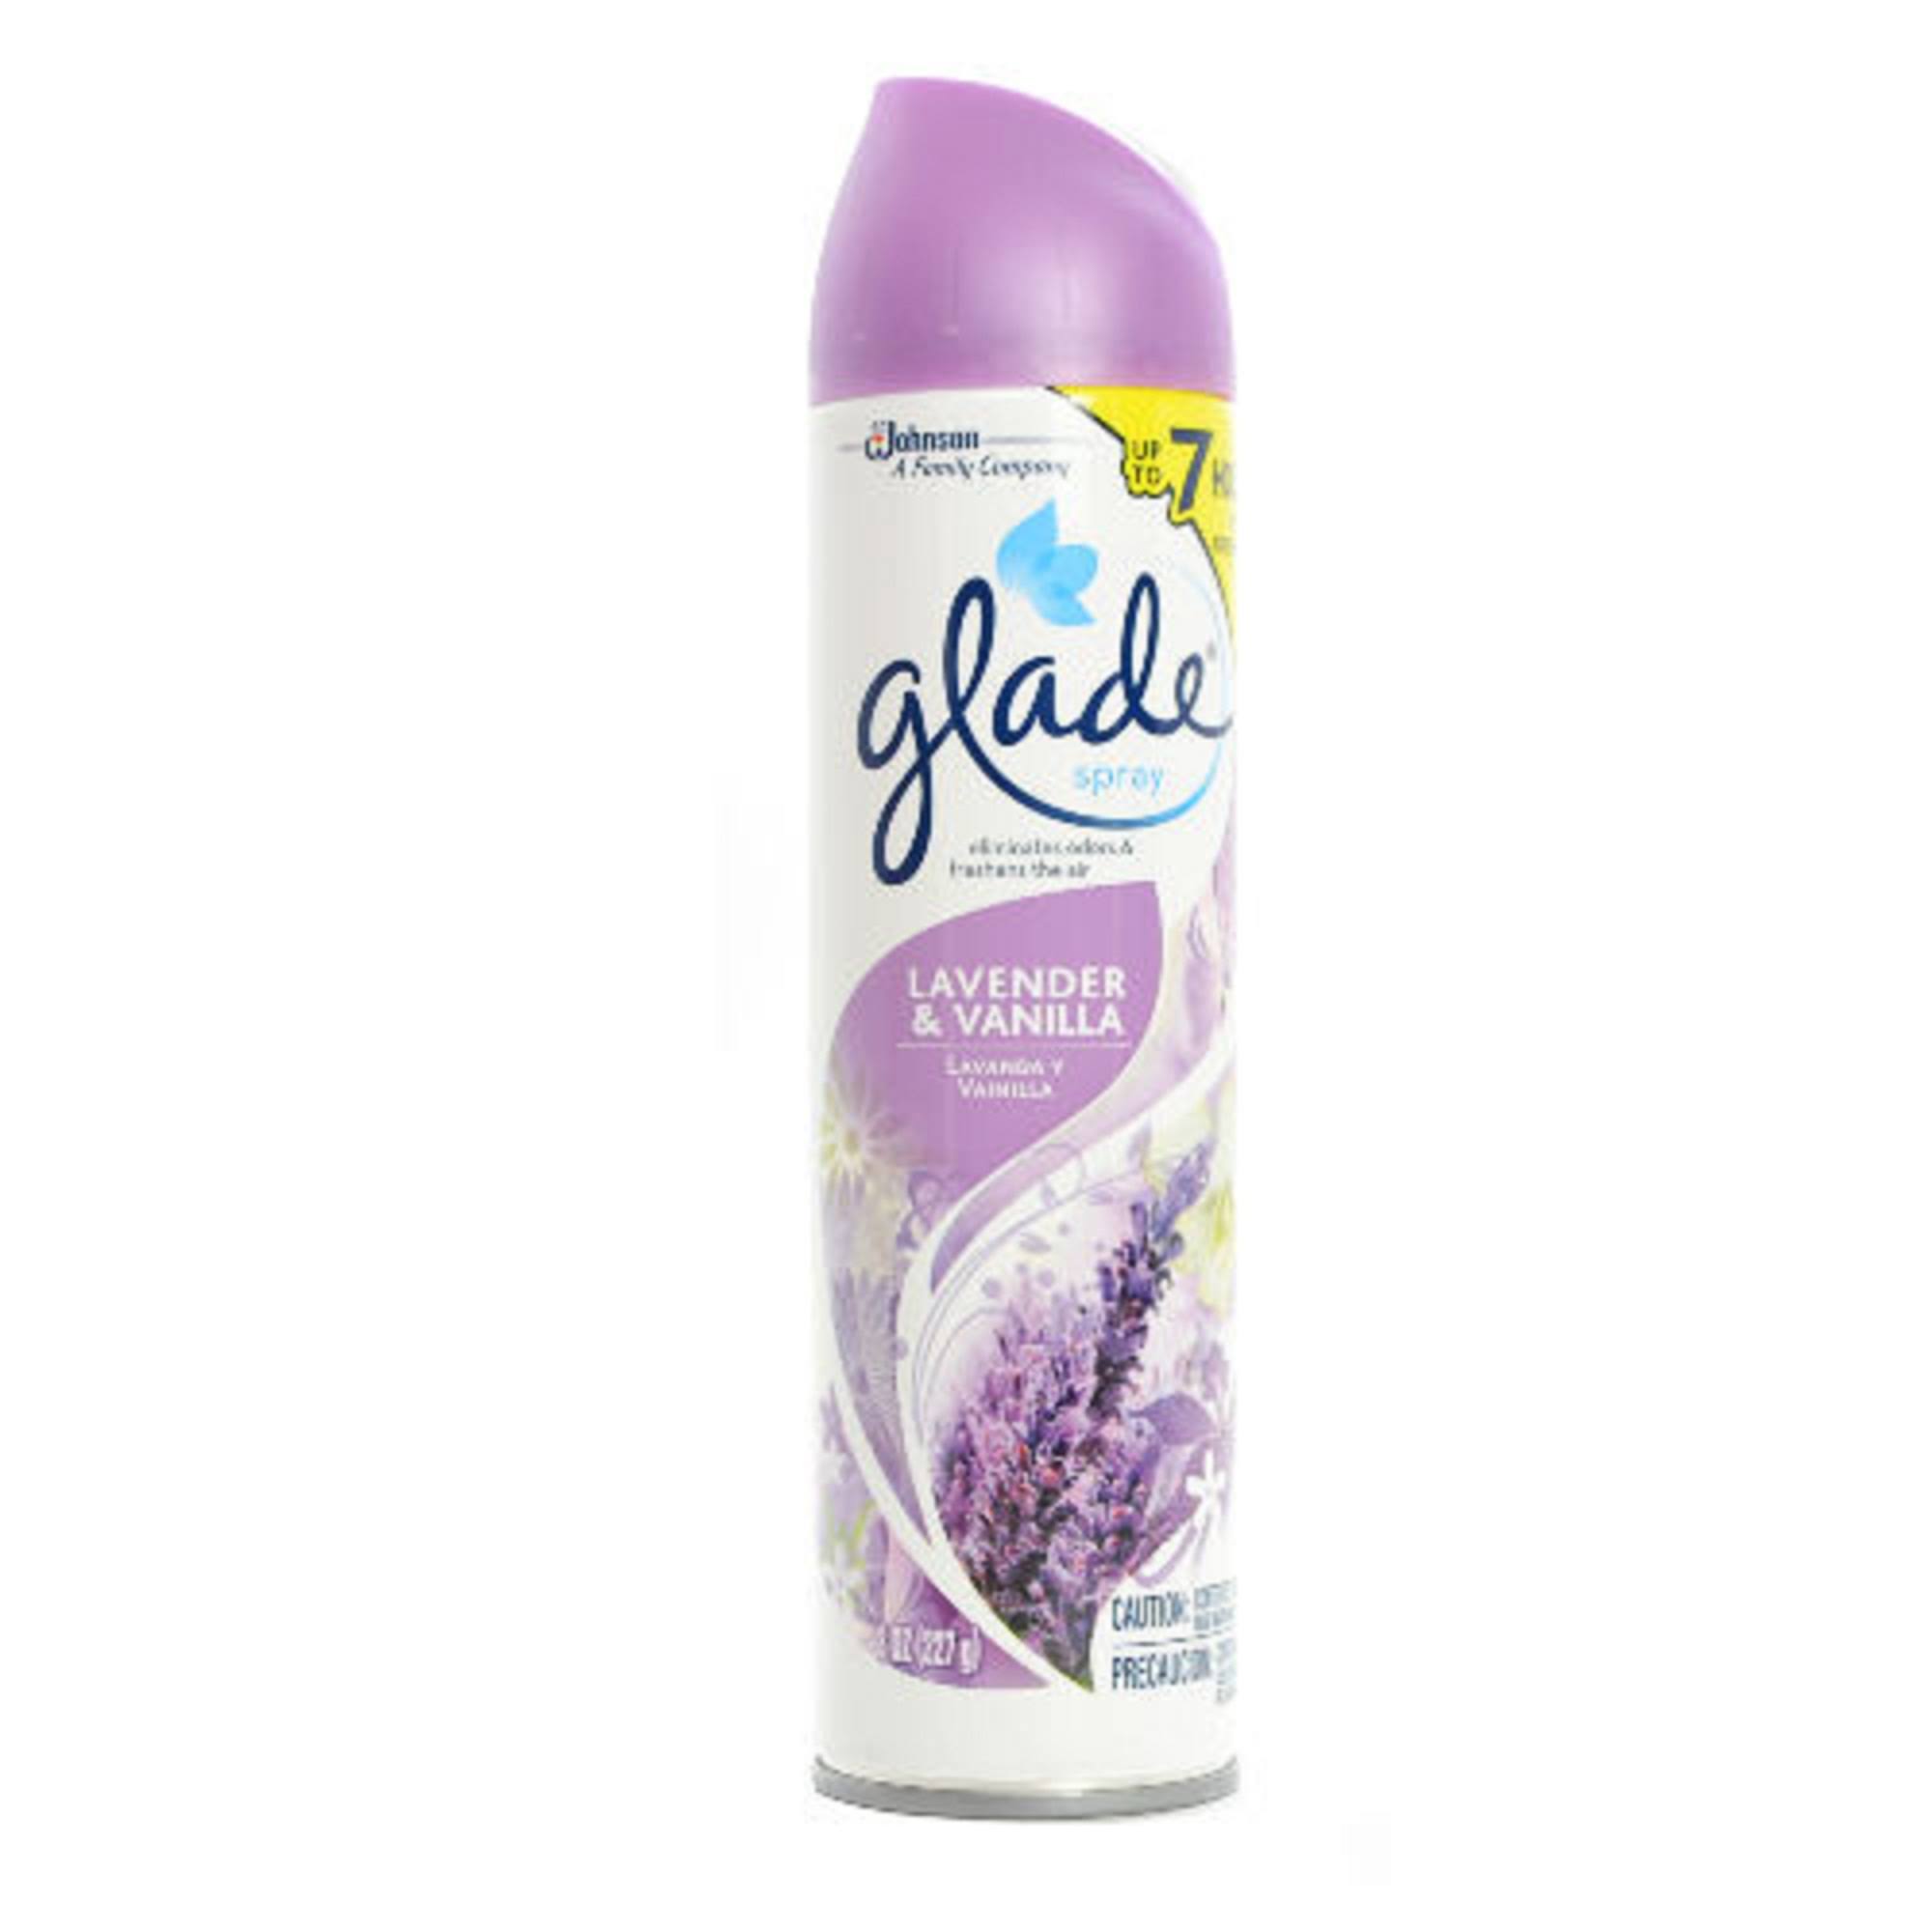 Glade Air Freshener - Lavender and Vanilla, 8oz